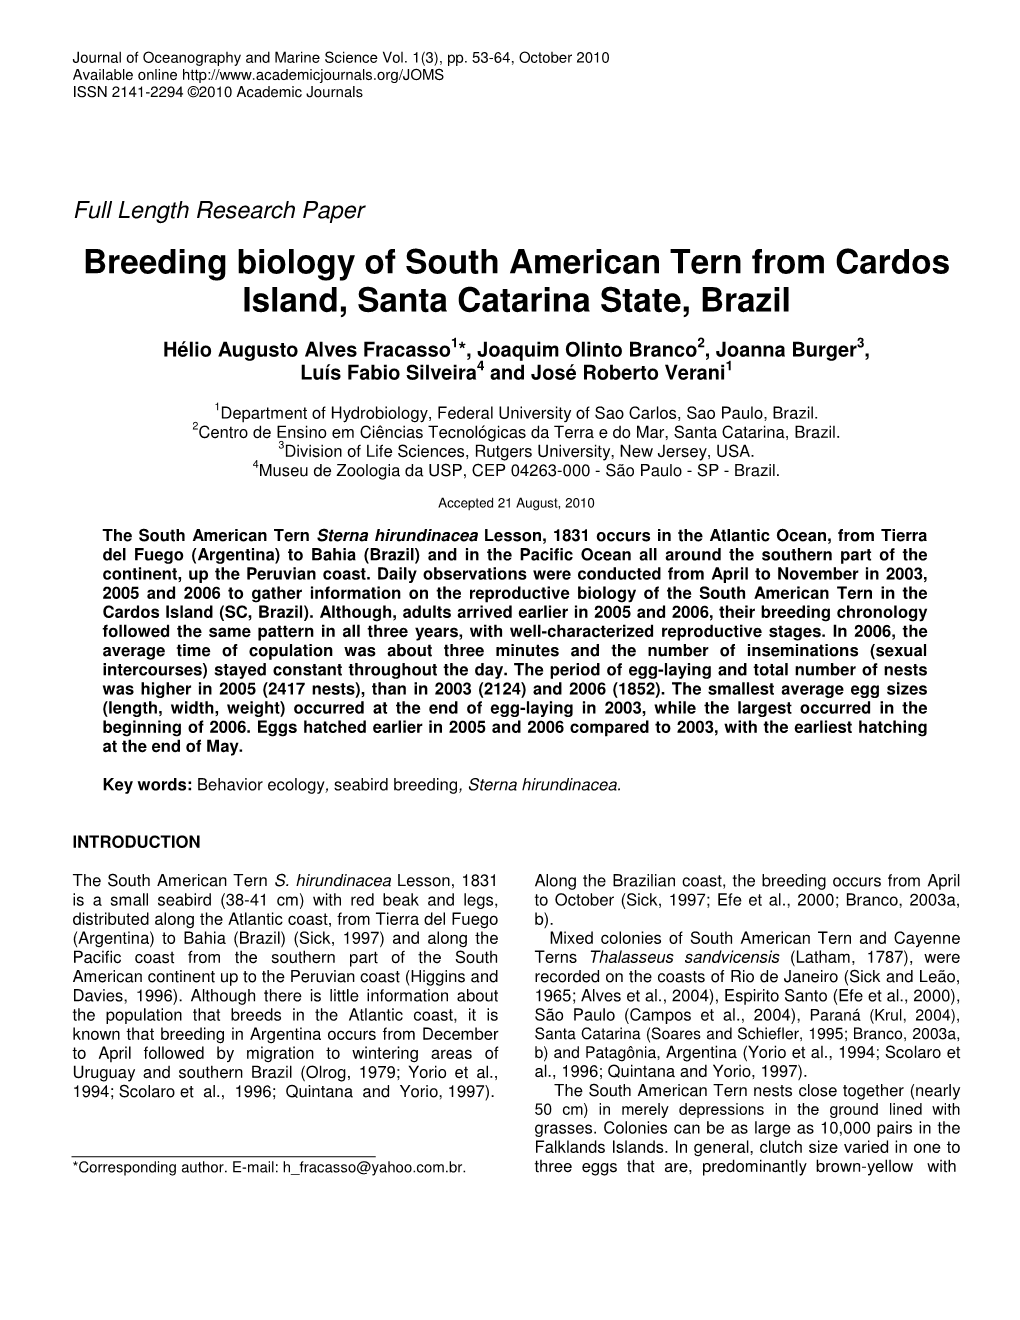 Breeding Biology of South American Tern from Cardos Island, Santa Catarina State, Brazil